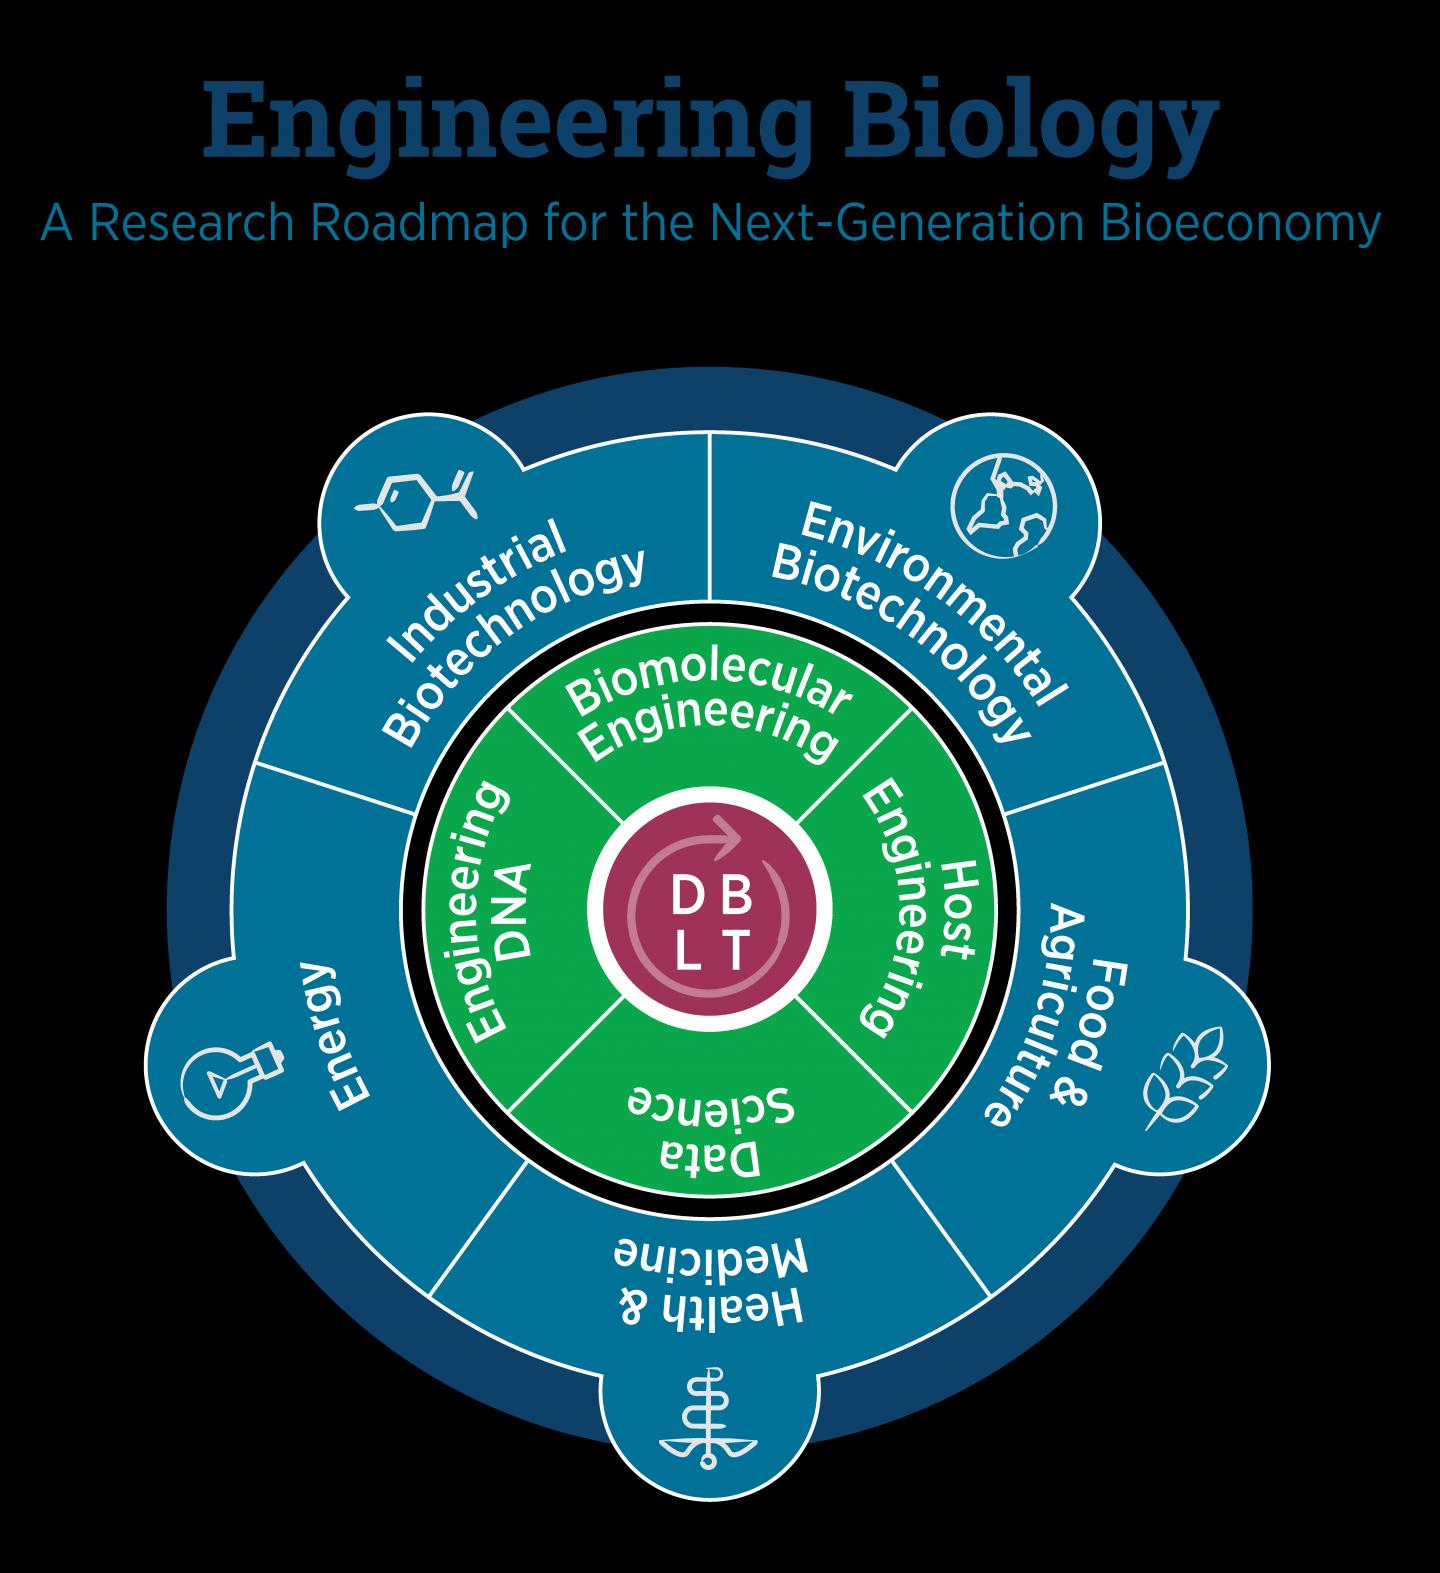 Roadmap for Engineering Biology